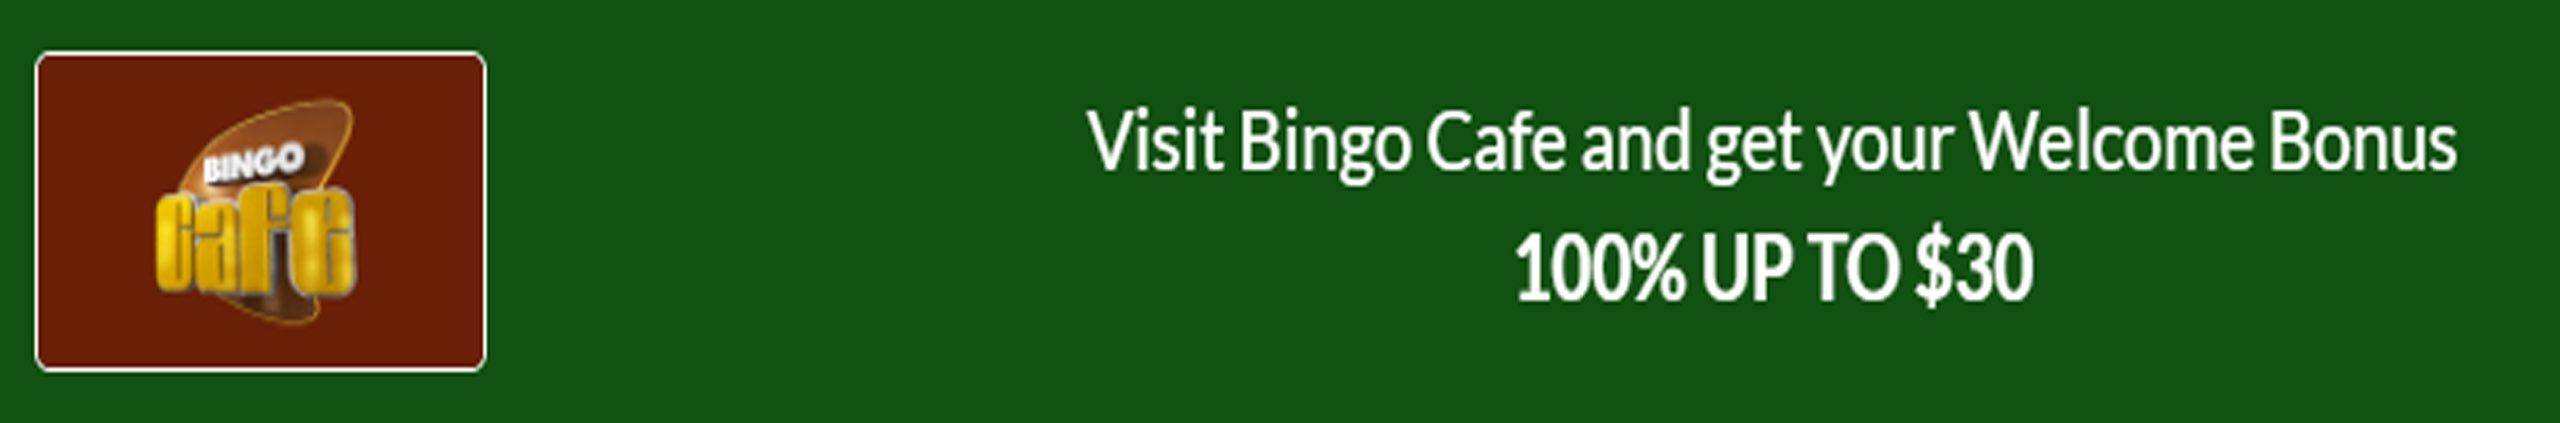 Bingo Cafe Bonus